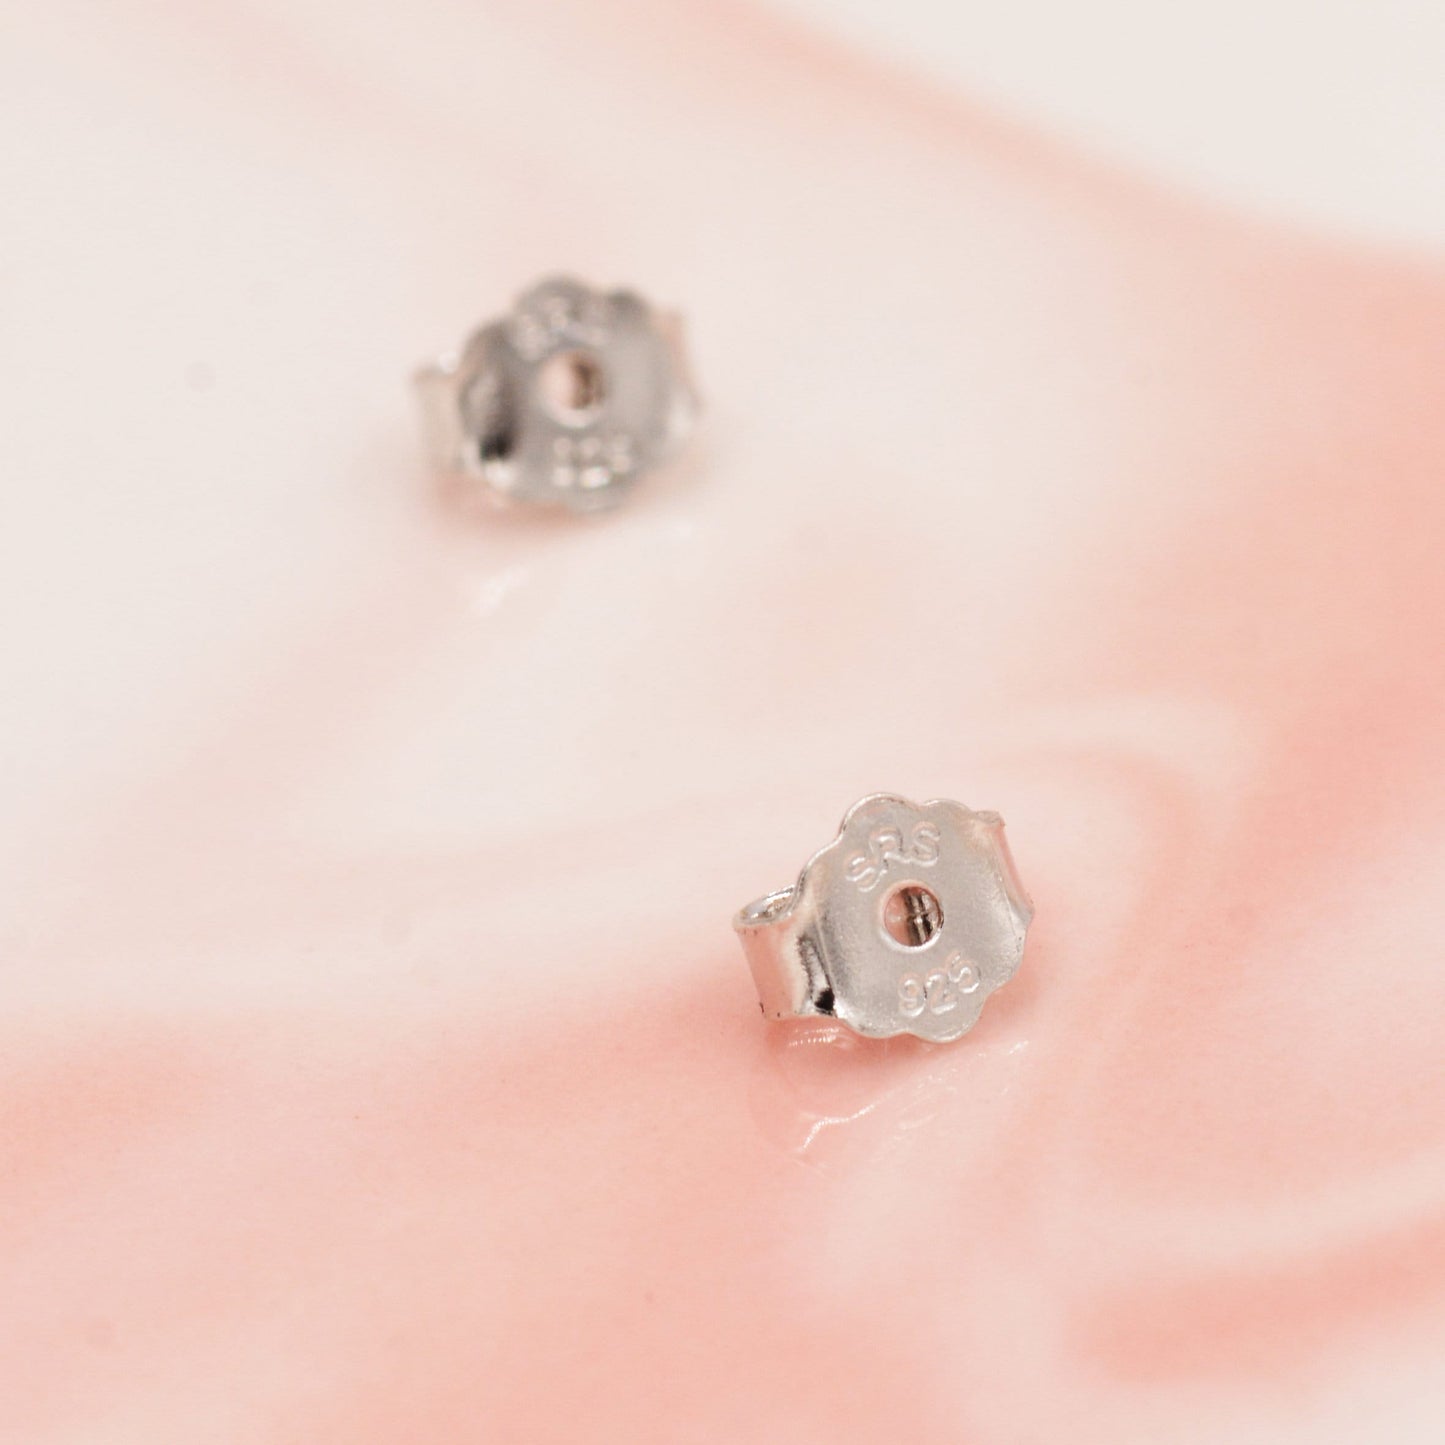 Extra Tiny White Opal Heart Stud Earrings in Sterling Silver - 3mm Fire Opal - Sustainable Lab Opal - Petite Stud Earrings